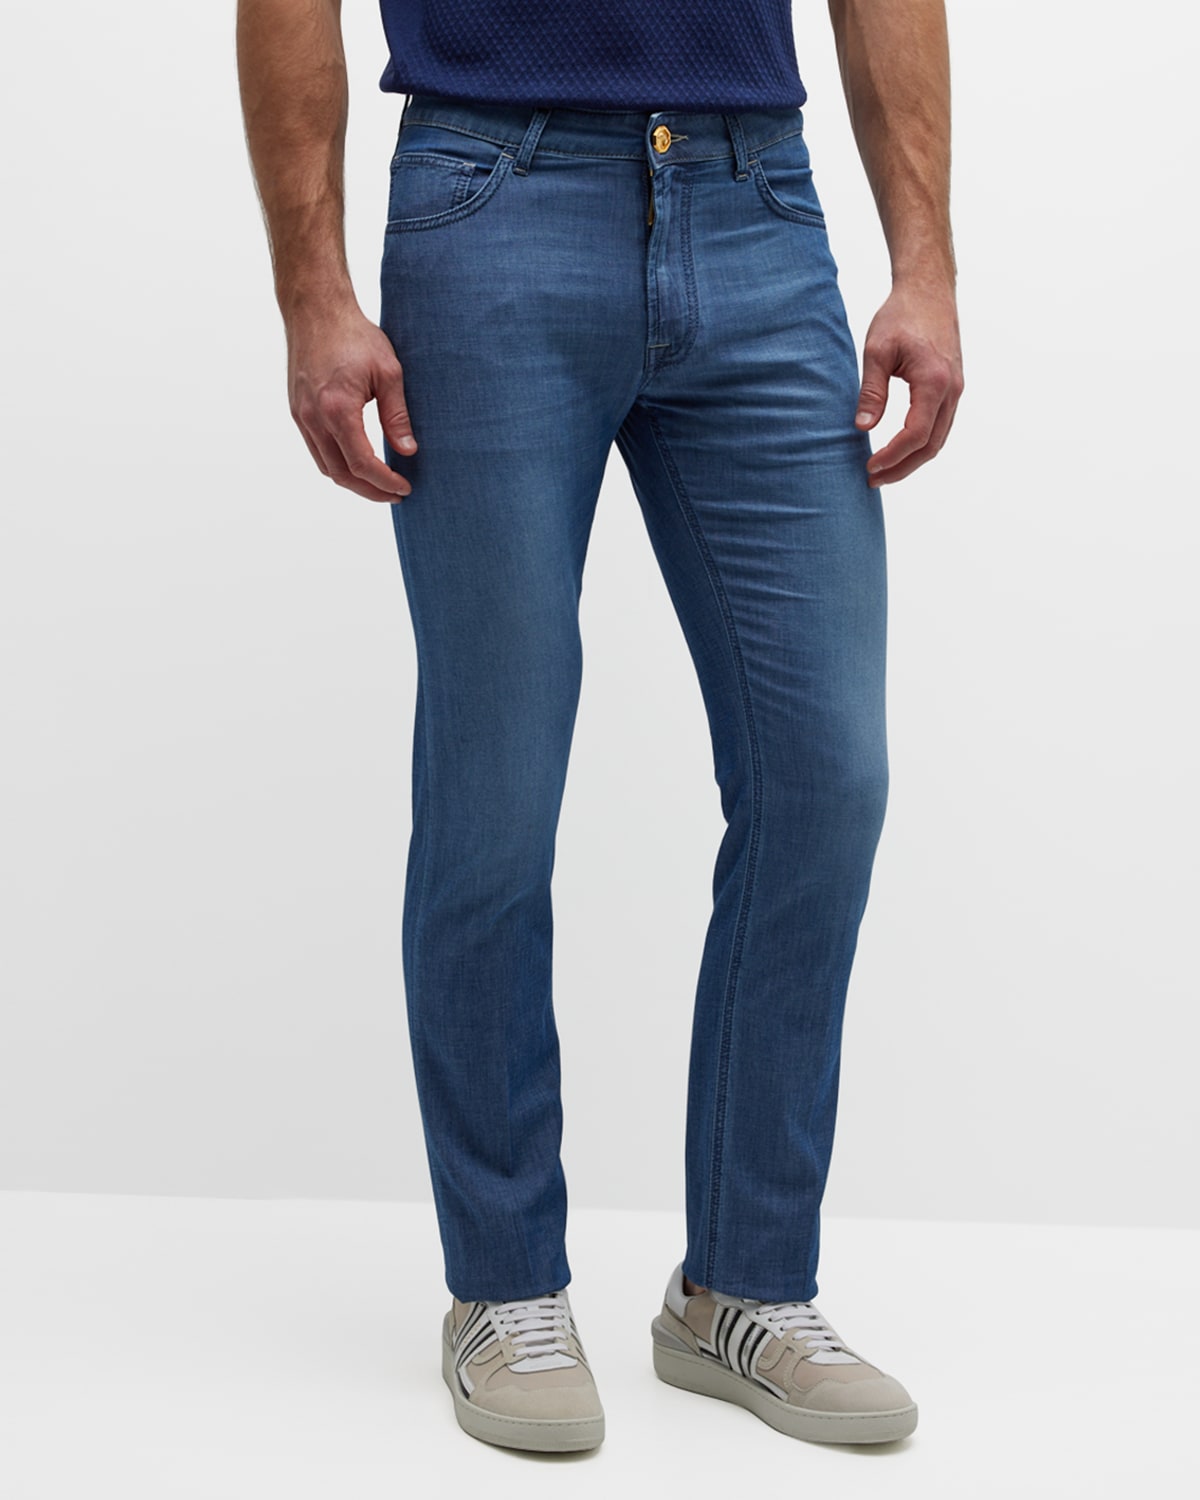 Men's Lightweight Straight-Leg Jeans